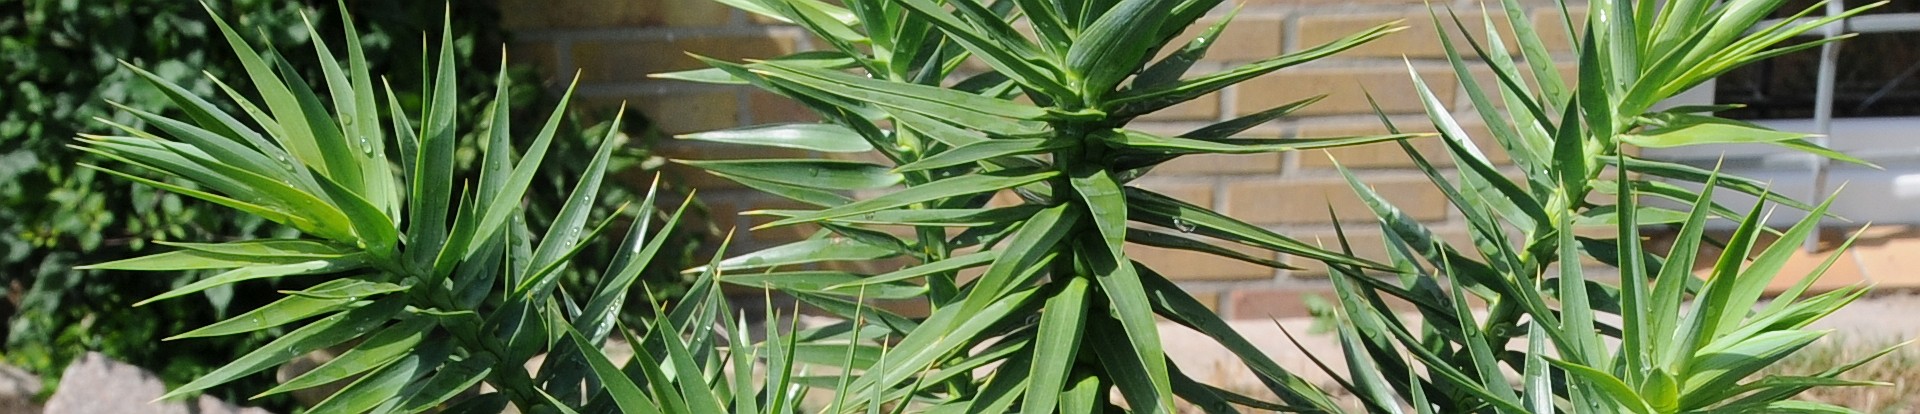 Araucaria araucana x Araucaria angustifolia - Andenpalme / Affenbaum